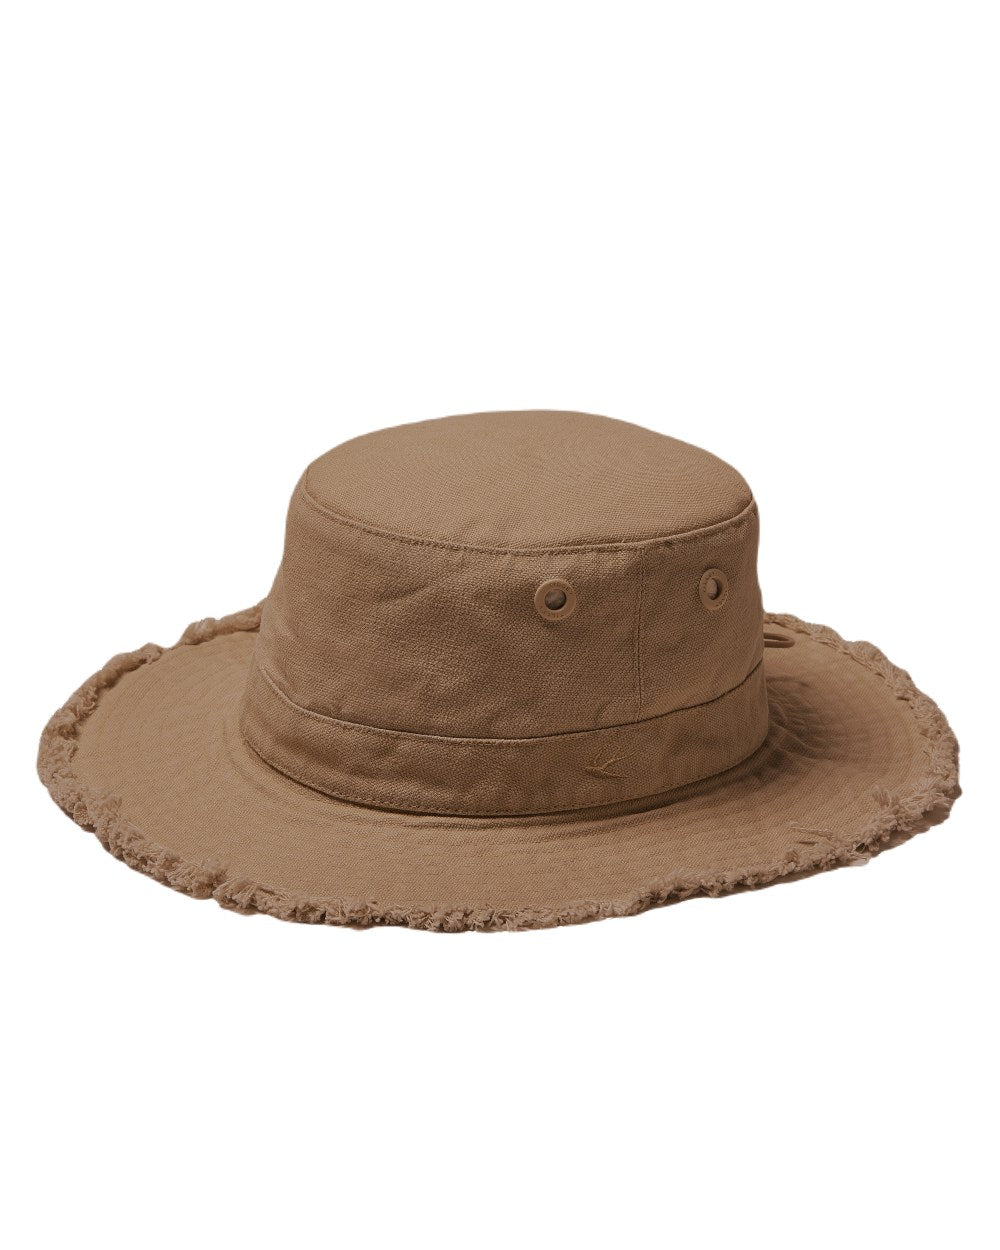 Dark Khaki Coloured Tilley Hat Fringe Wanderer On A White Background 